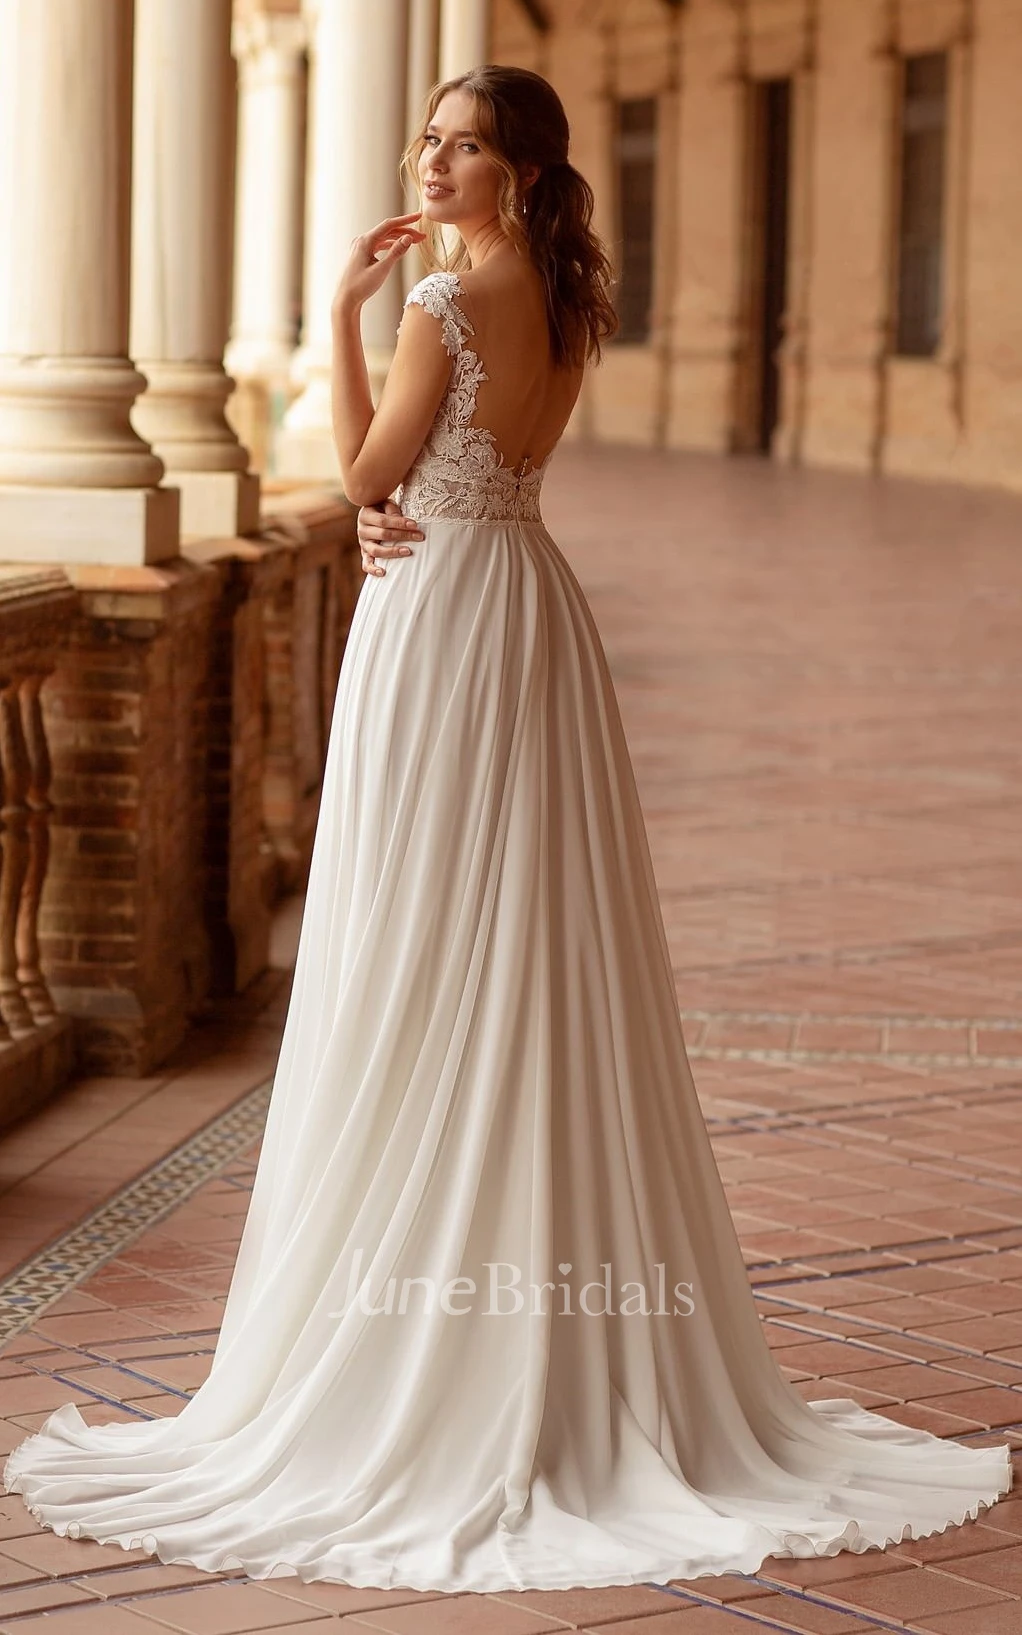 Elegant Sexy Beach Boho Lace Wedding Dress Vintage Elopement A-Line Low Back  Bridal Gown - June Bridals